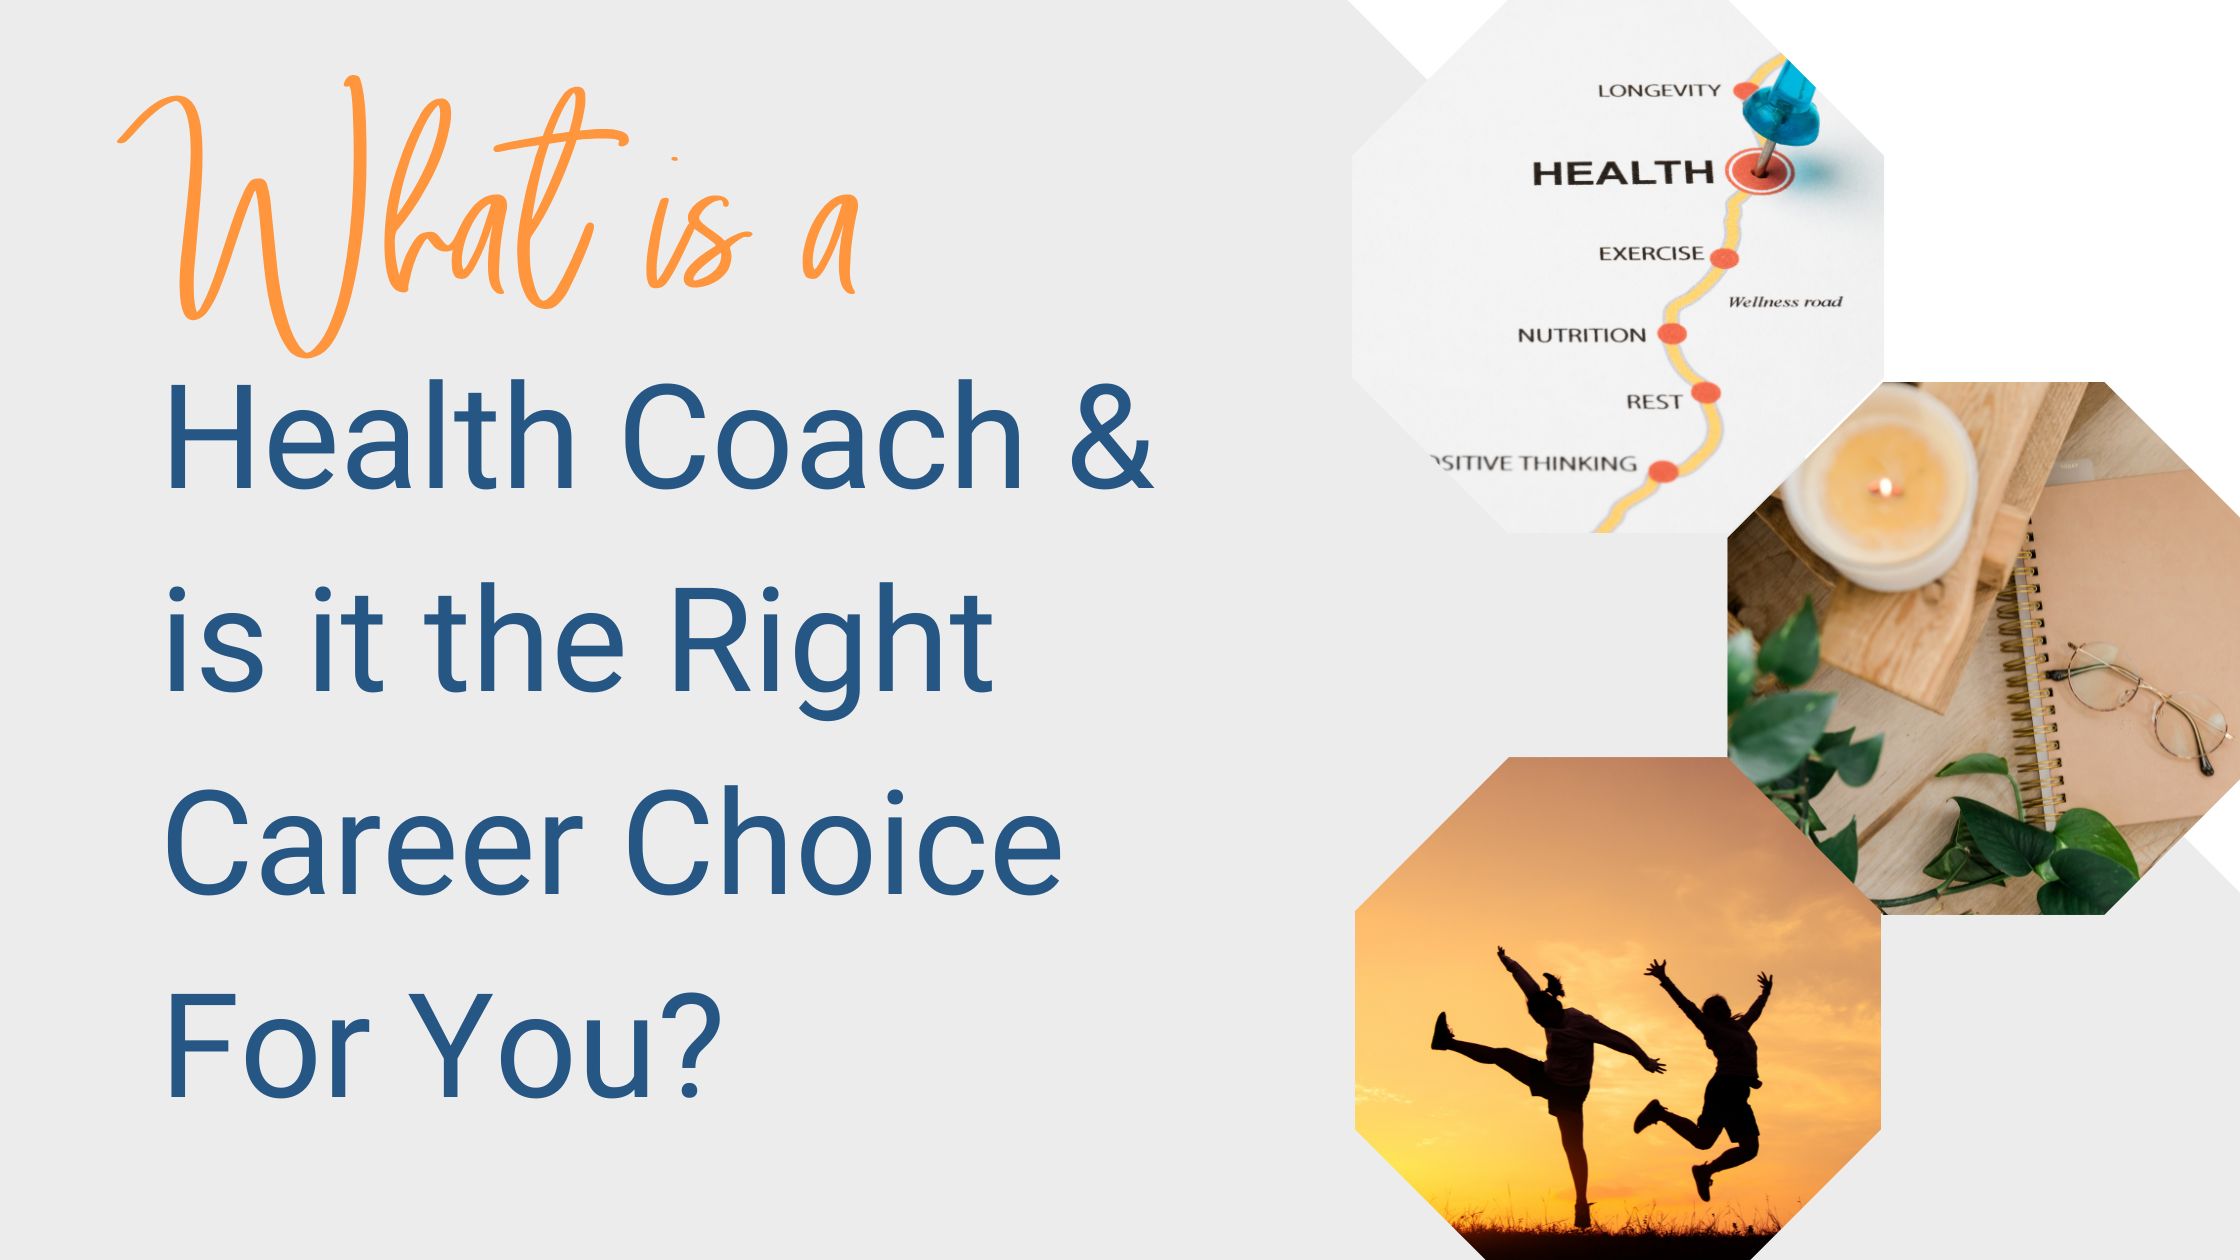 What is a health coach